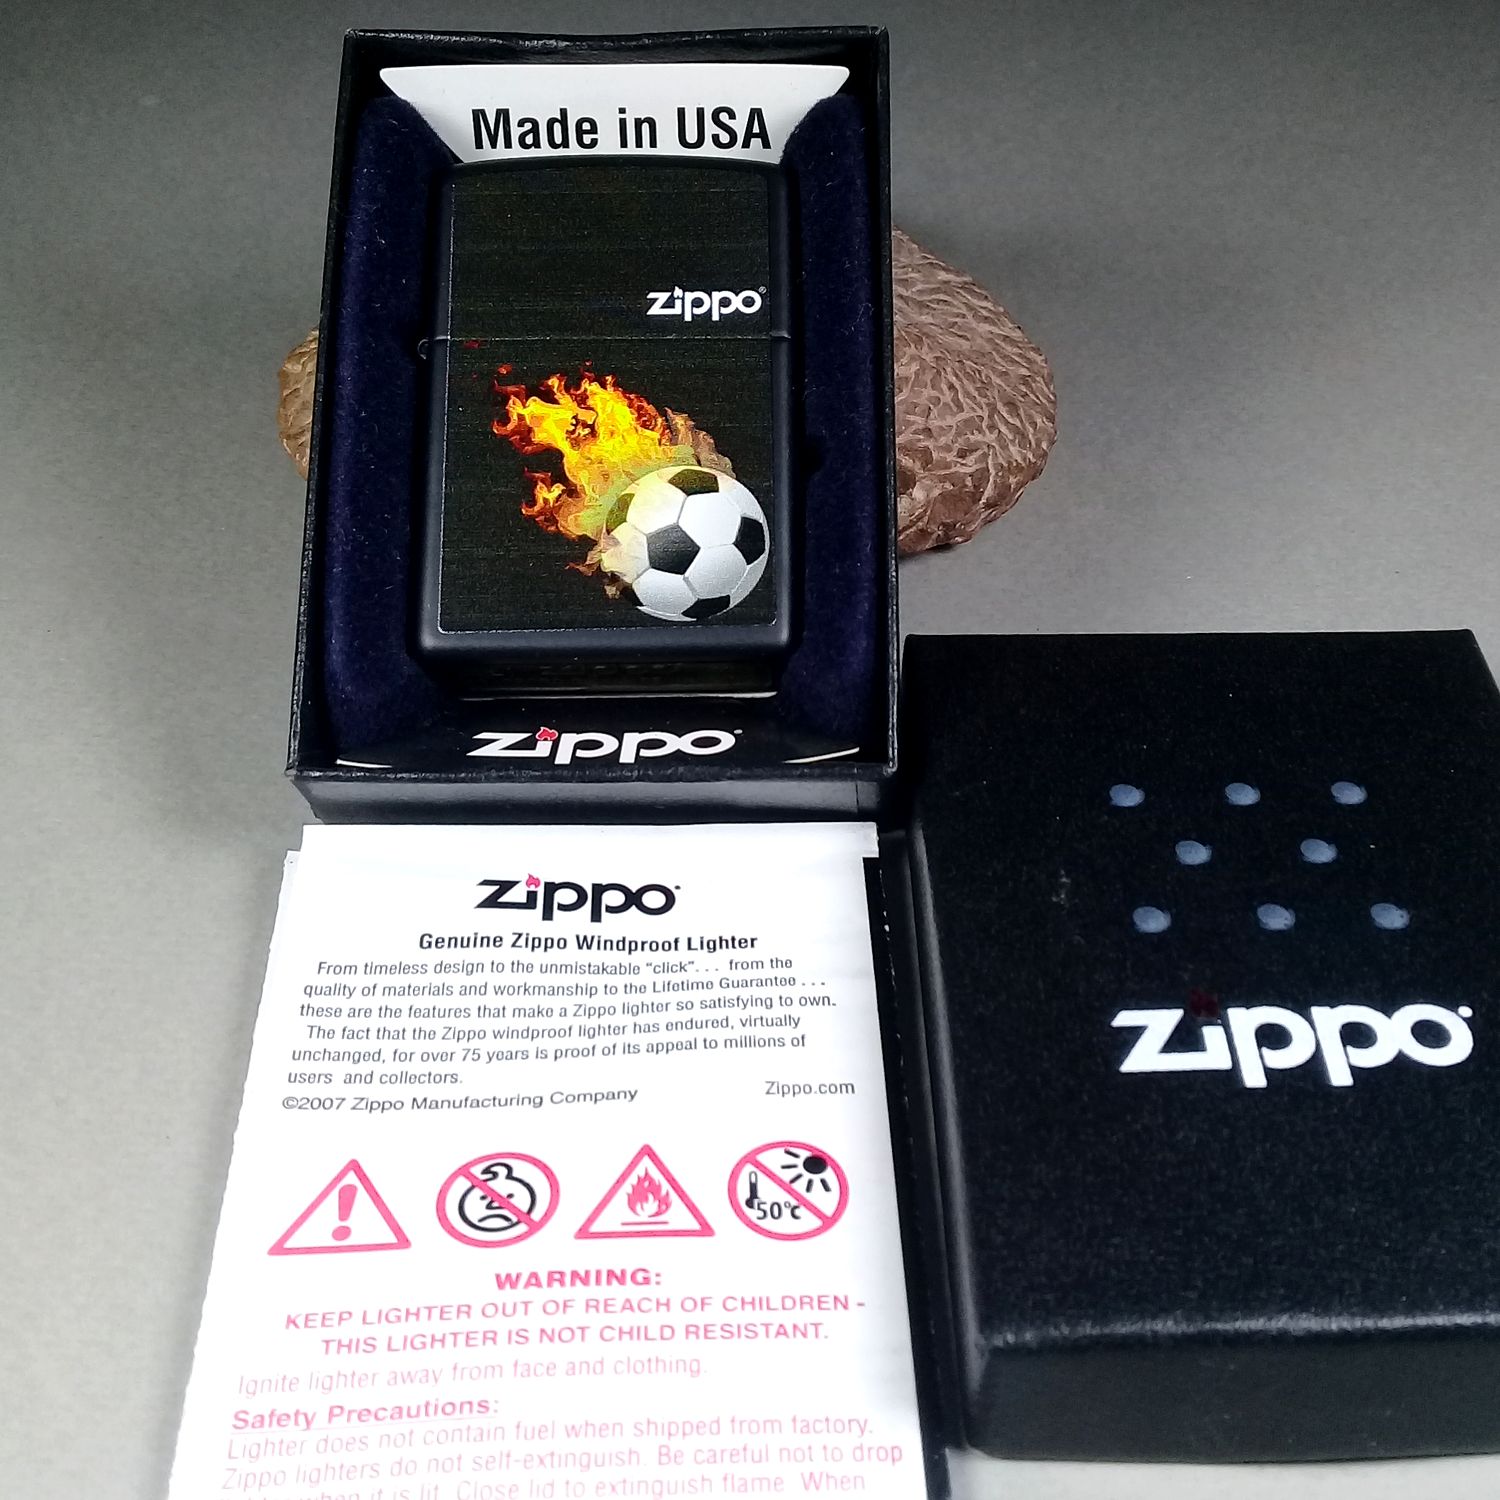 Zippo Futebol Soccer Football Limited Edition Unlit Lighter in Box